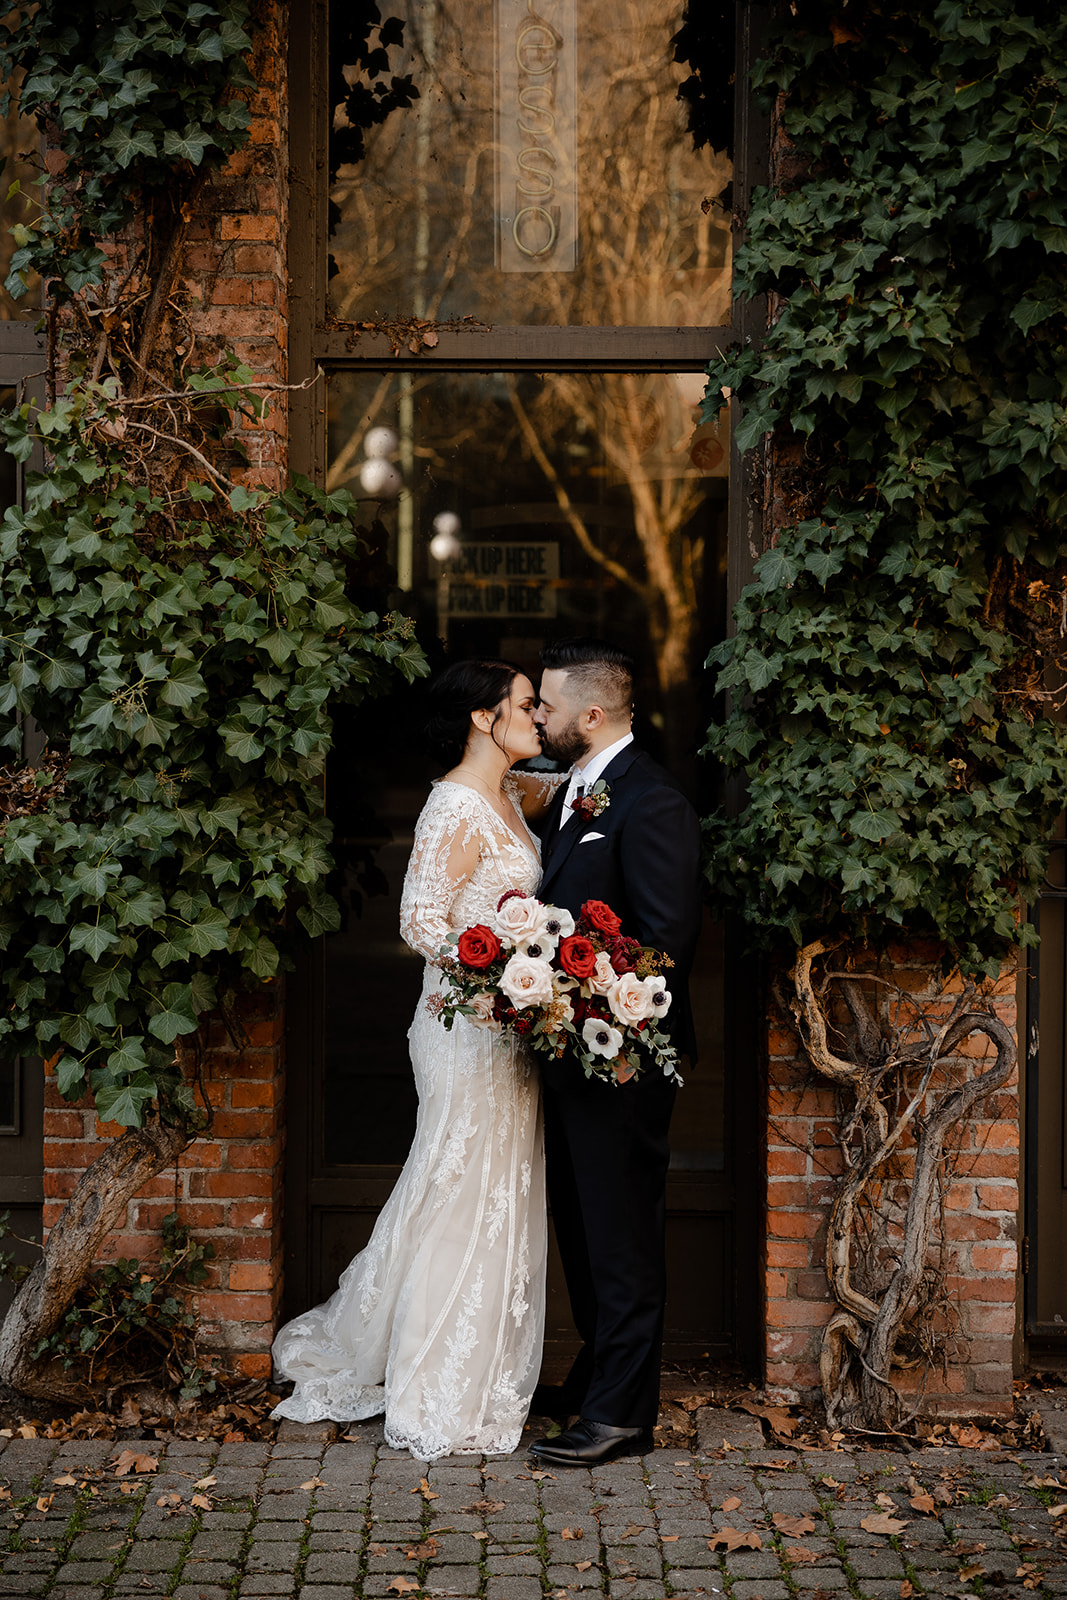 Bride and groom kiss standing amongst overgrown trees between brick walls.